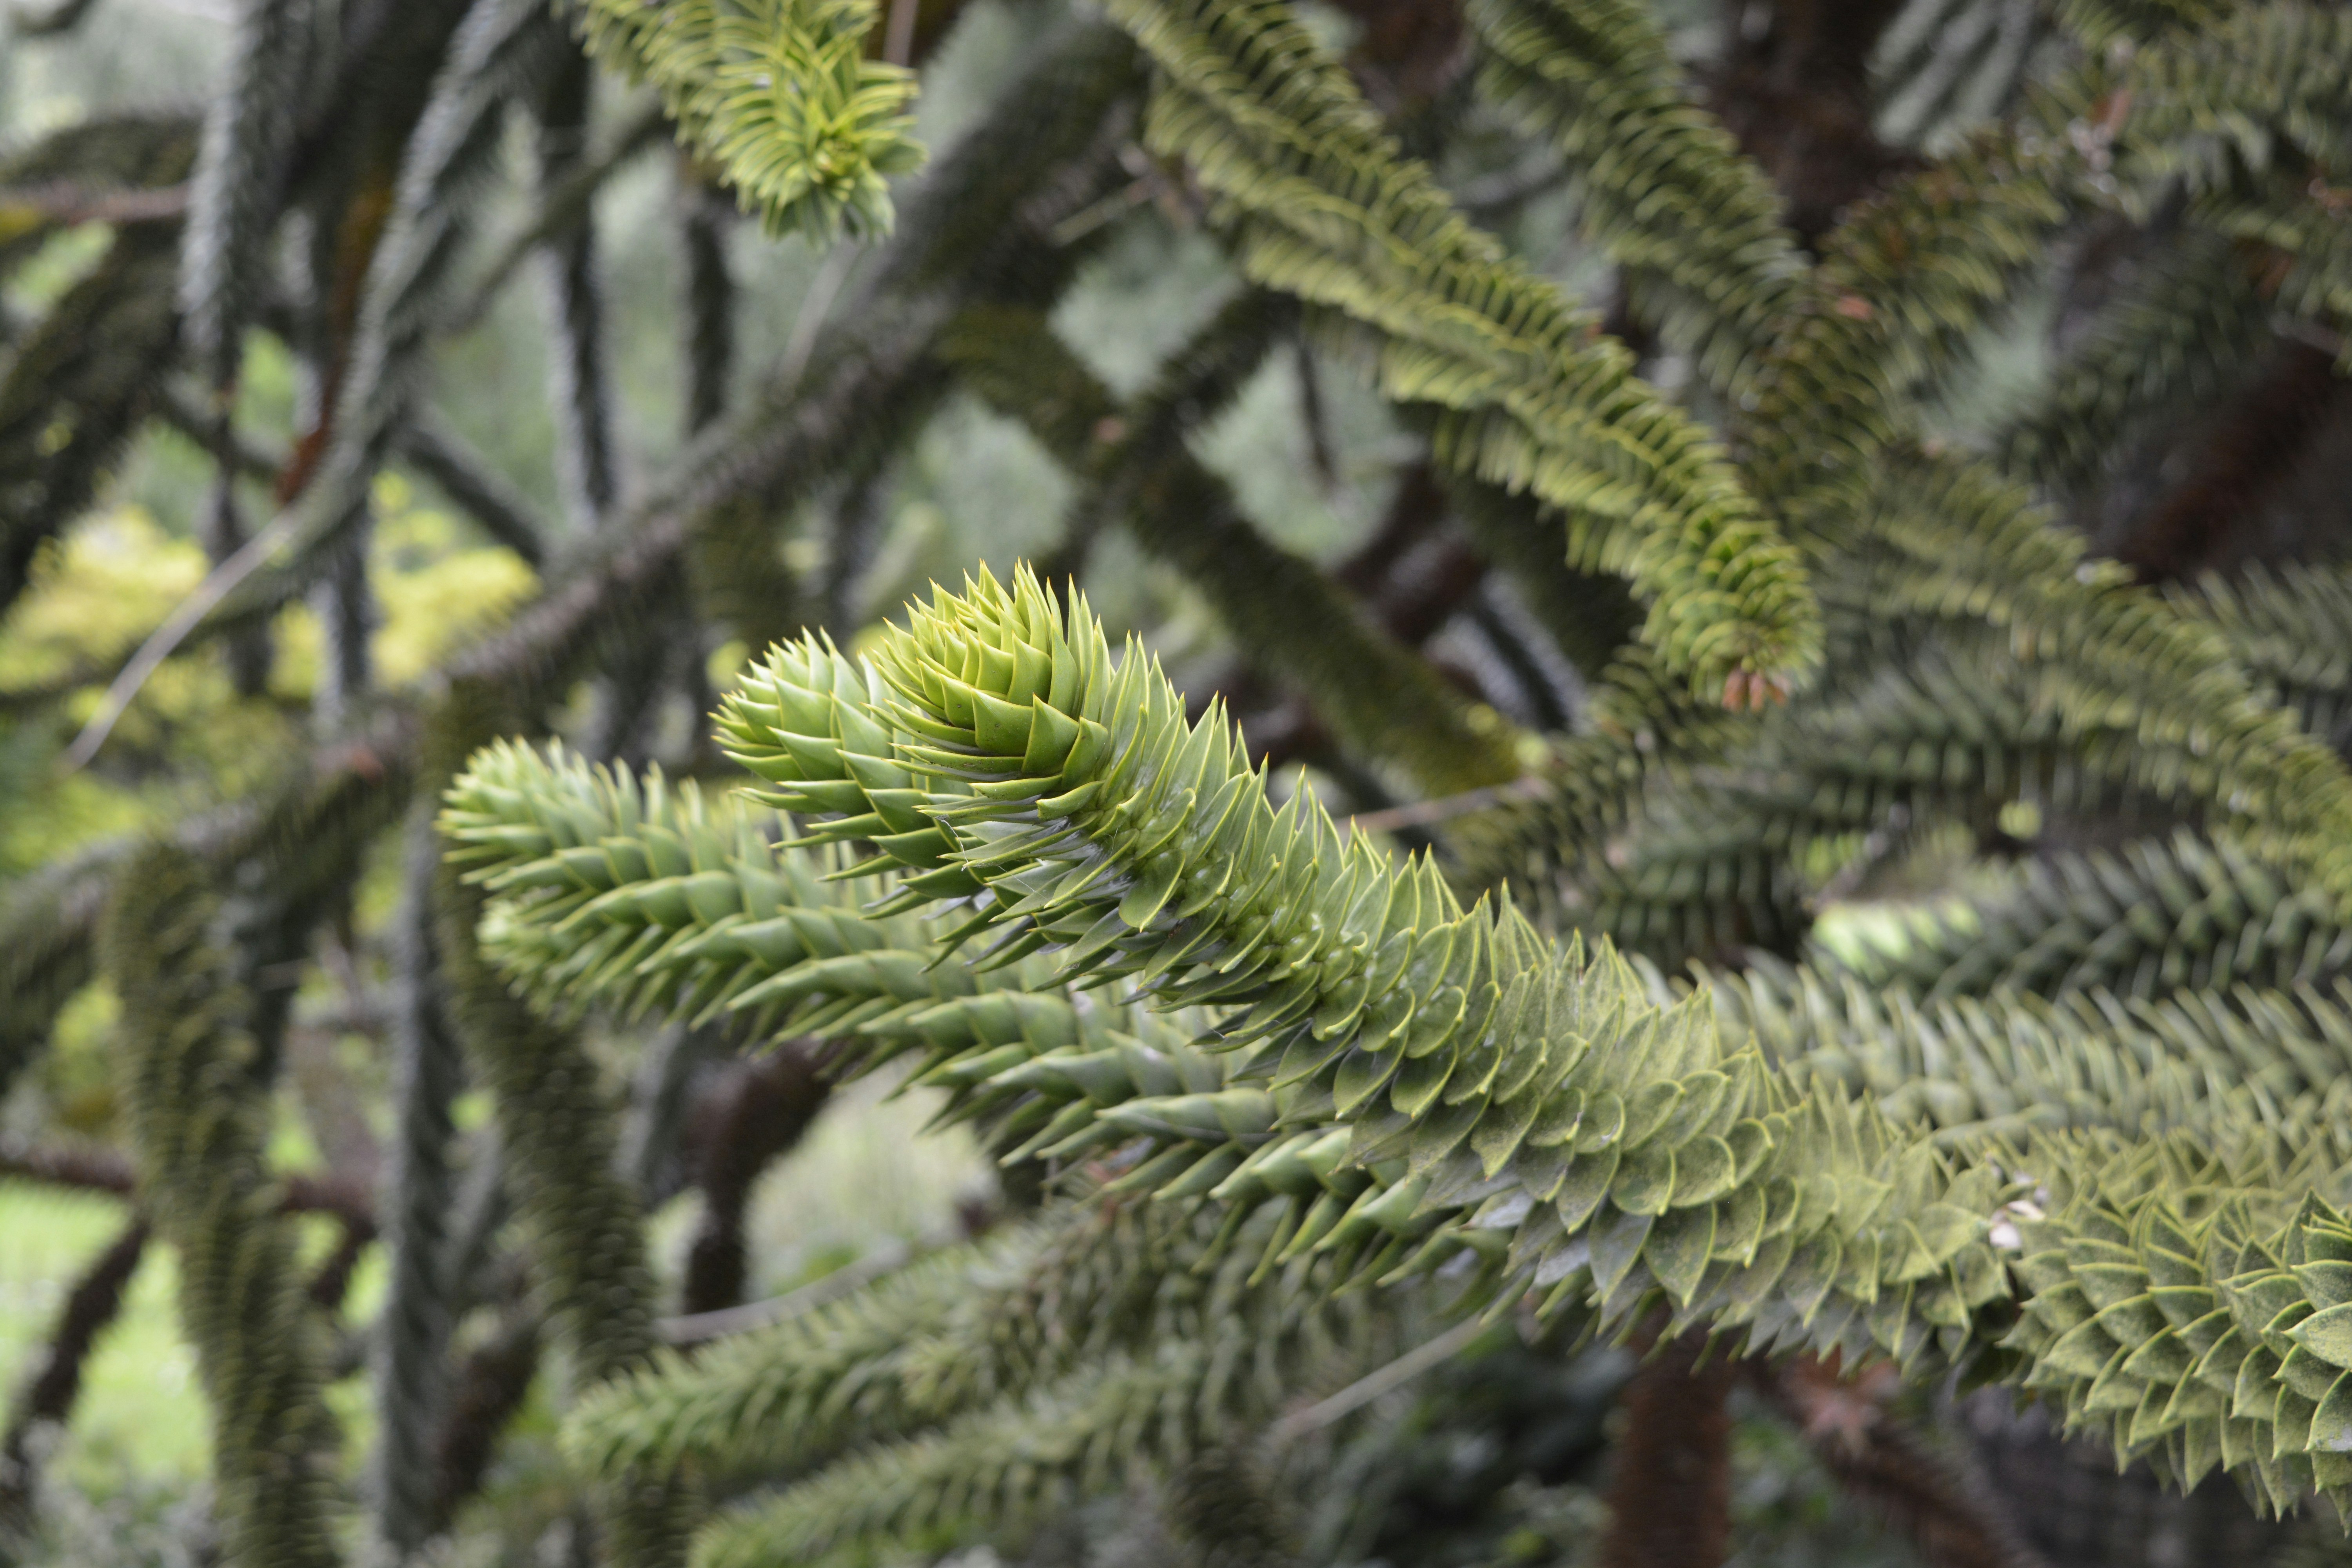 Araucaria , Chilean pine, also known as Monkey Puzzle